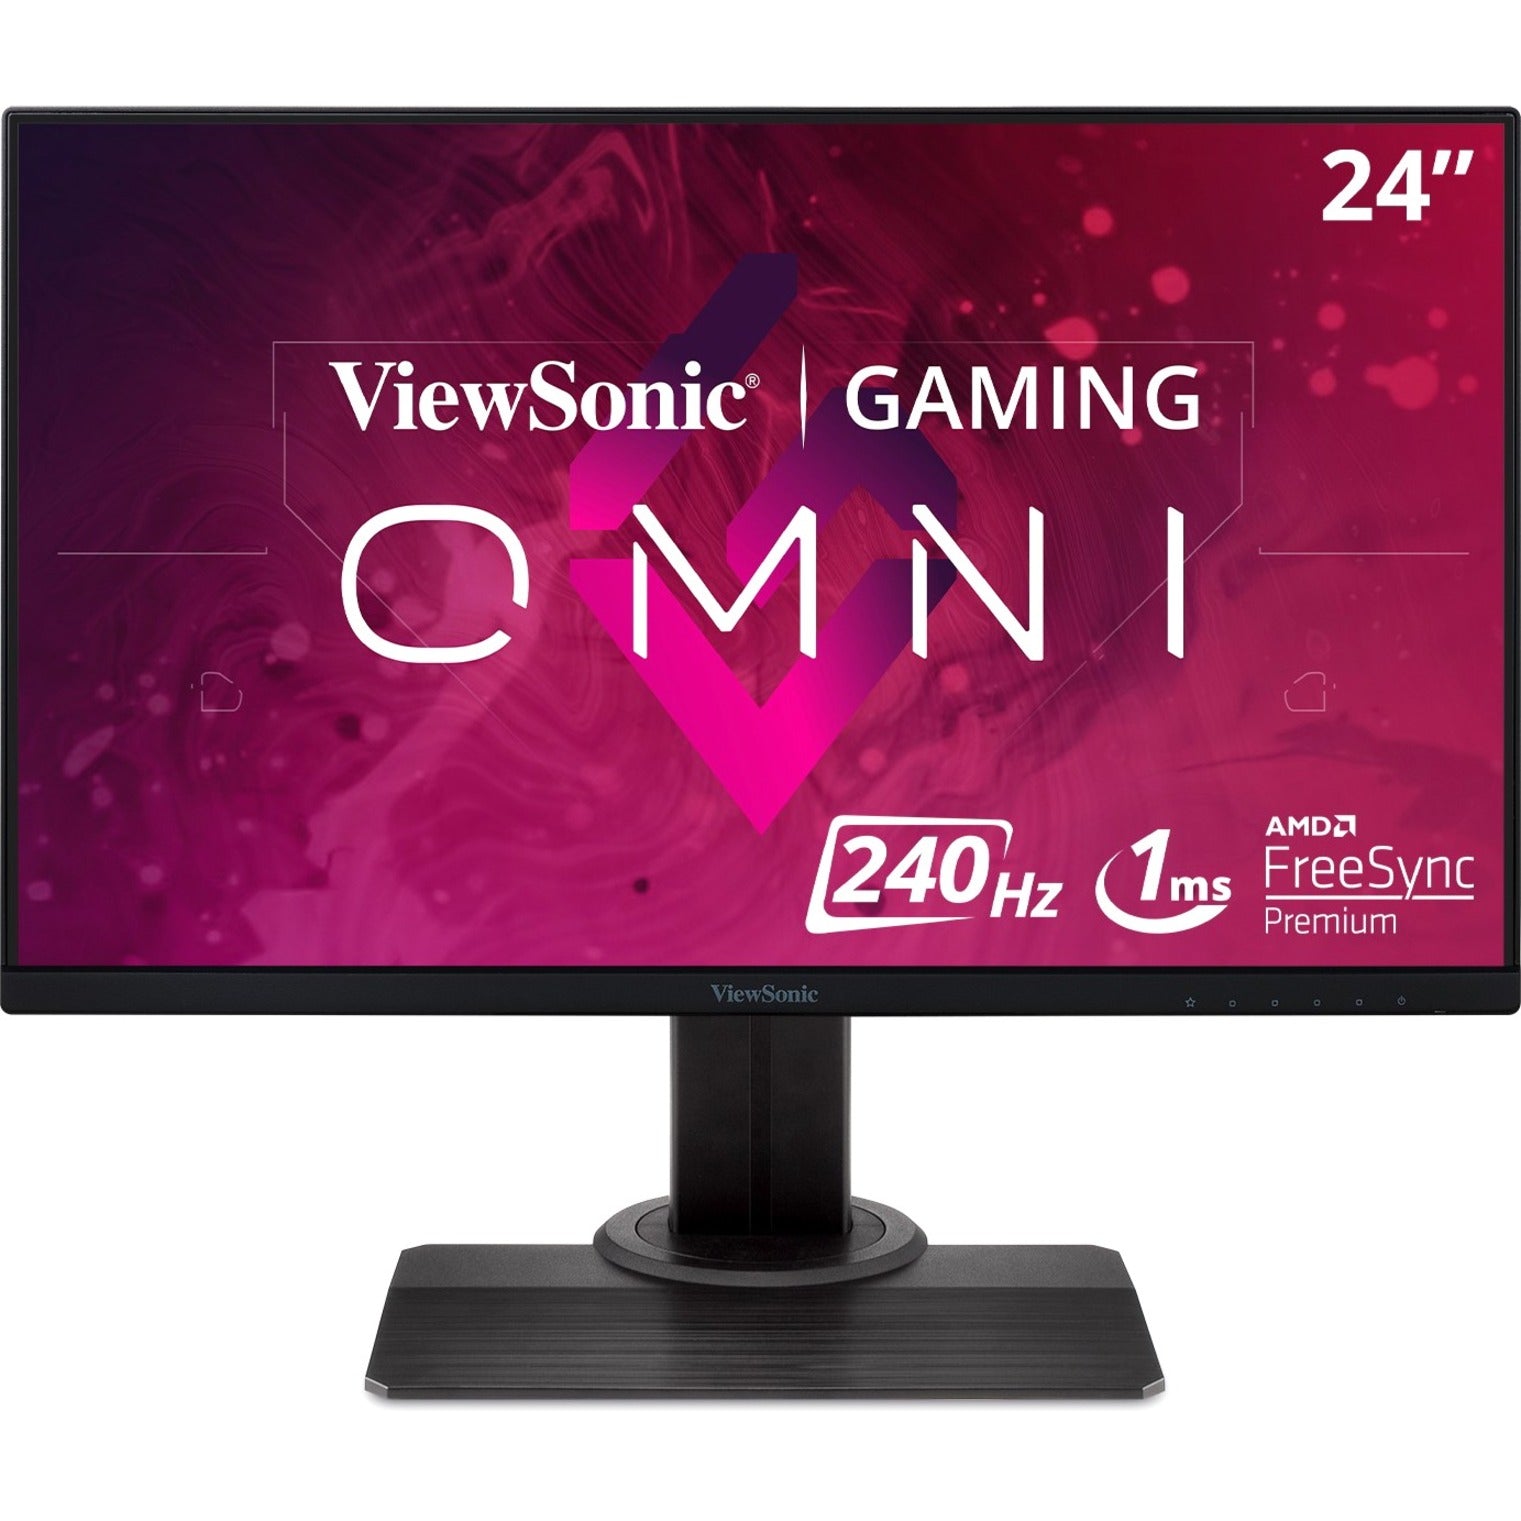 ViewSonic XG2431 Gaming Widescreen LCD Monitor, 24 1ms 240Hz IPS with AMD FreeSync Premium